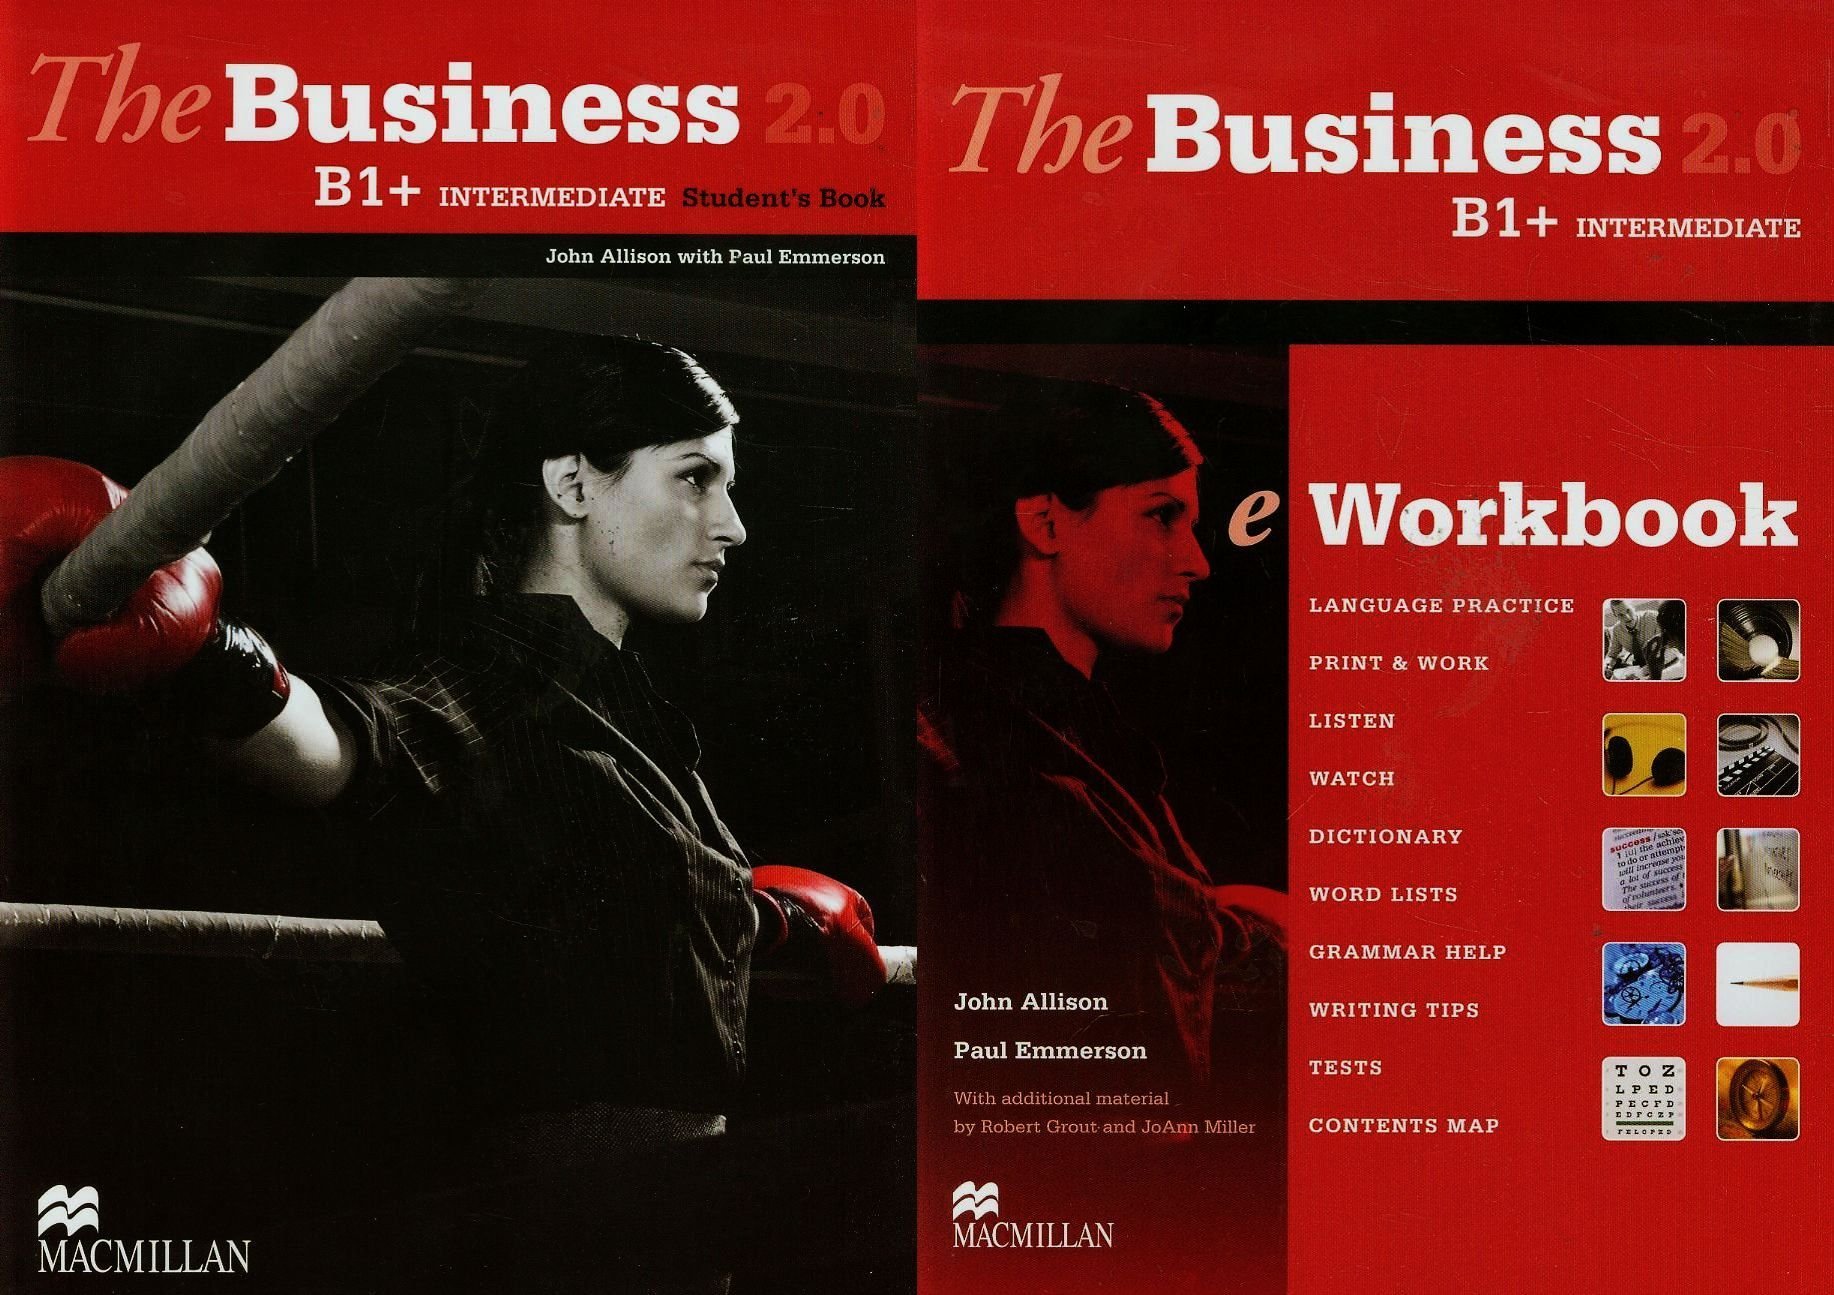 THE BUSINESS 2.0 INTERMEDIATE Student's Book + eWorkbook DVD-ROM